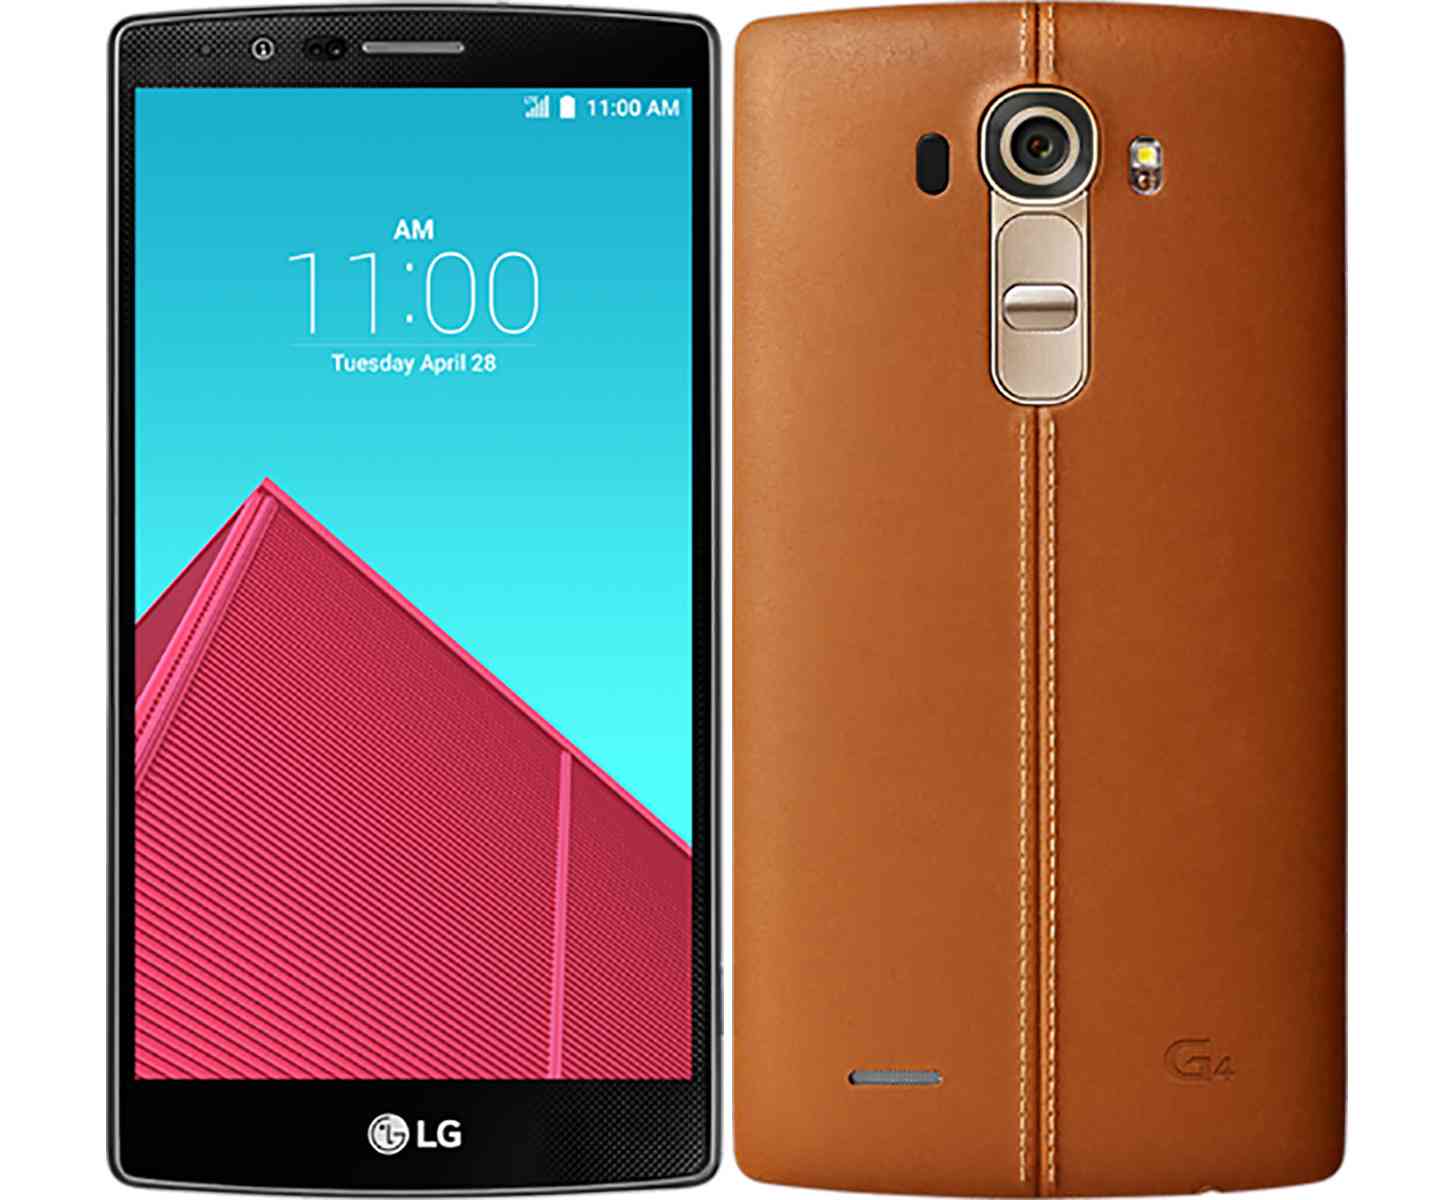 LG G4 leather back leak